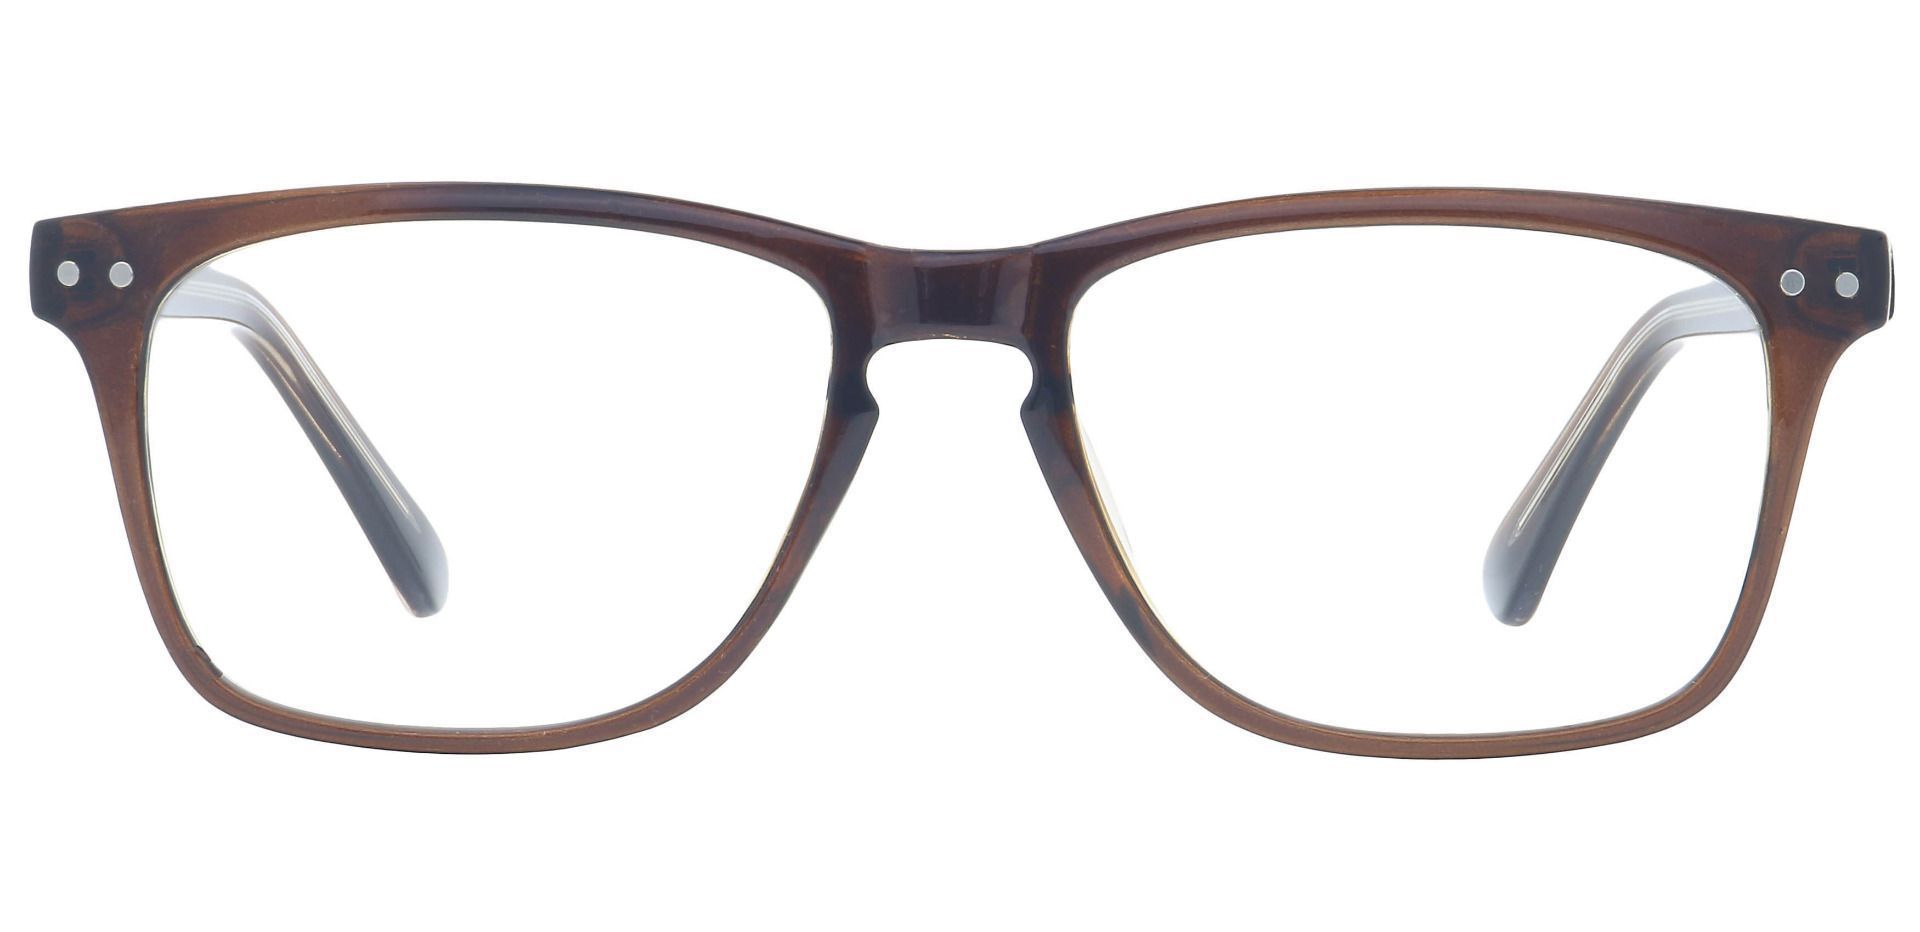 Hope Oval Progressive Glasses - Brown